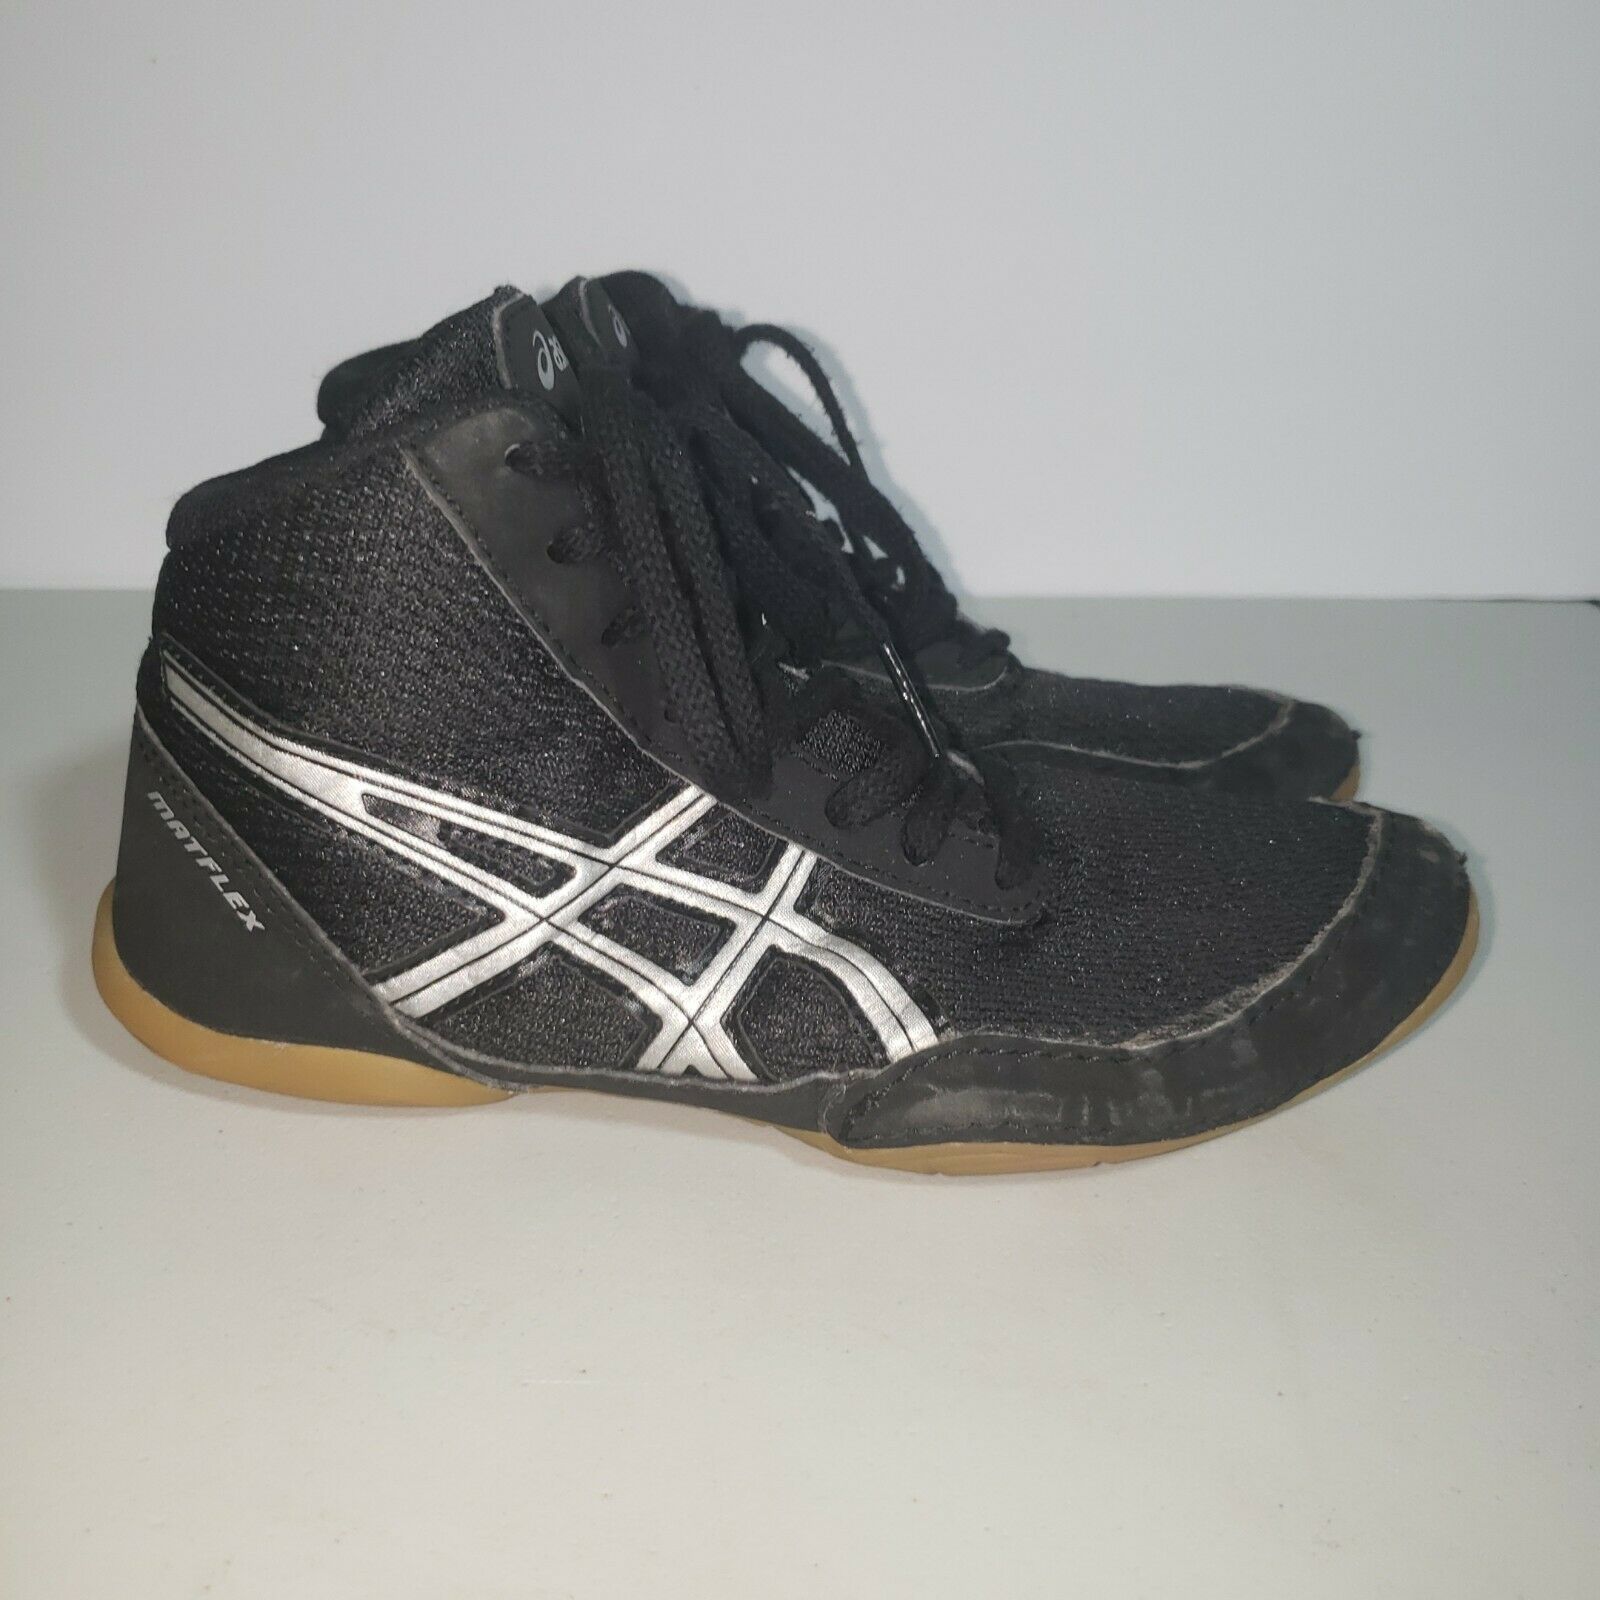 Size 2 ASICS Matflex Wrestling Shoes C545N Youth Black Silver Tan bottoms